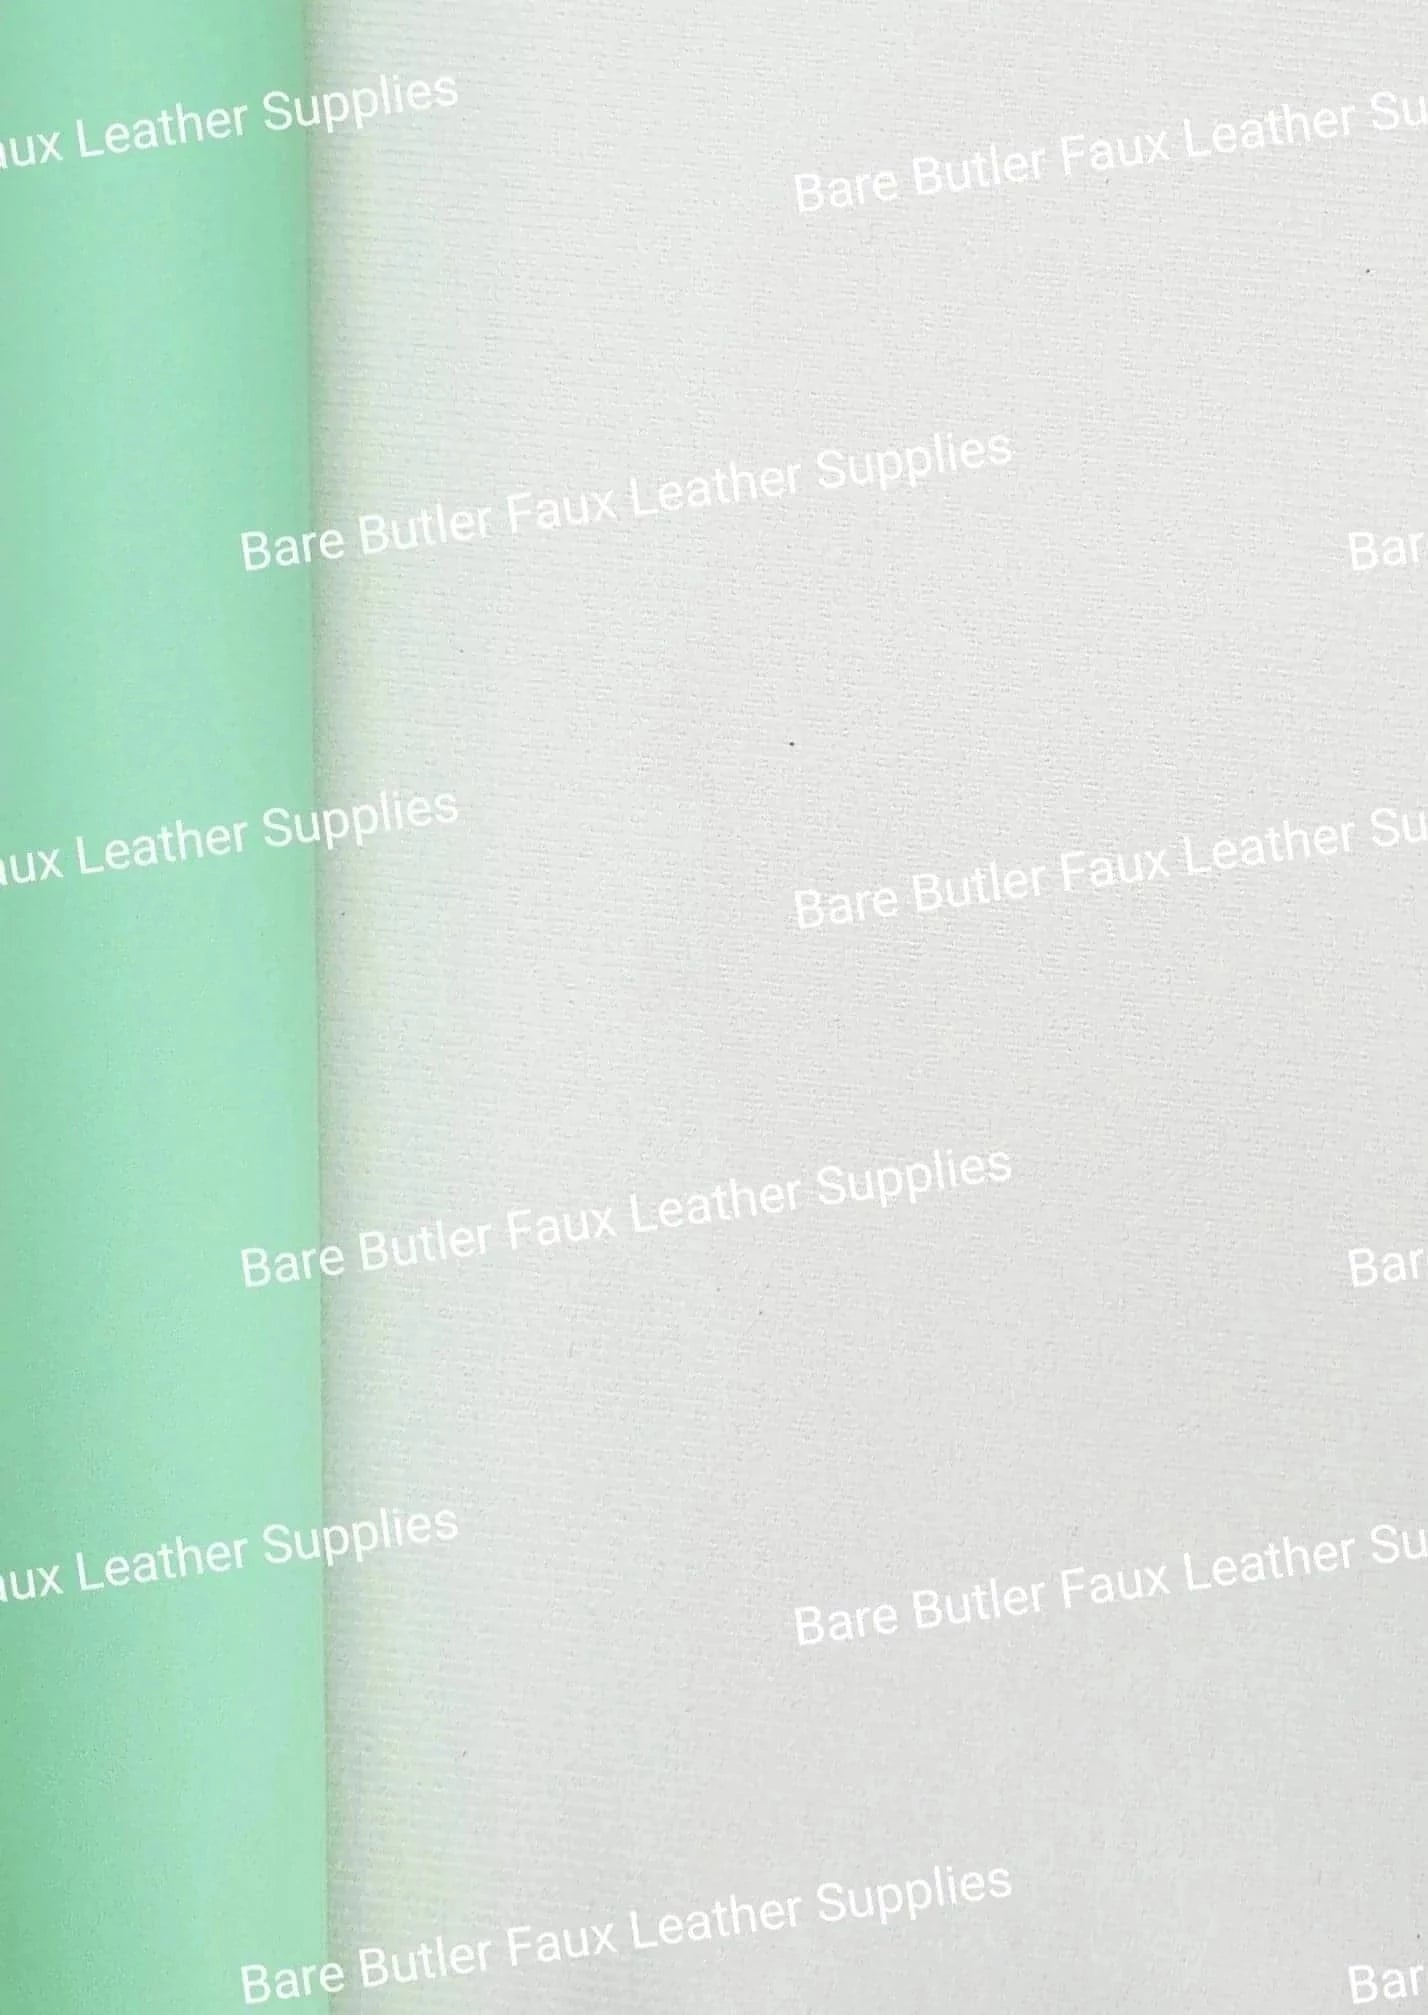 Roll - Pastels Seafoam - butter, Faux, Faux Leather, pastel, pastels, Roll, soft - Bare Butler Faux Leather Supplies 